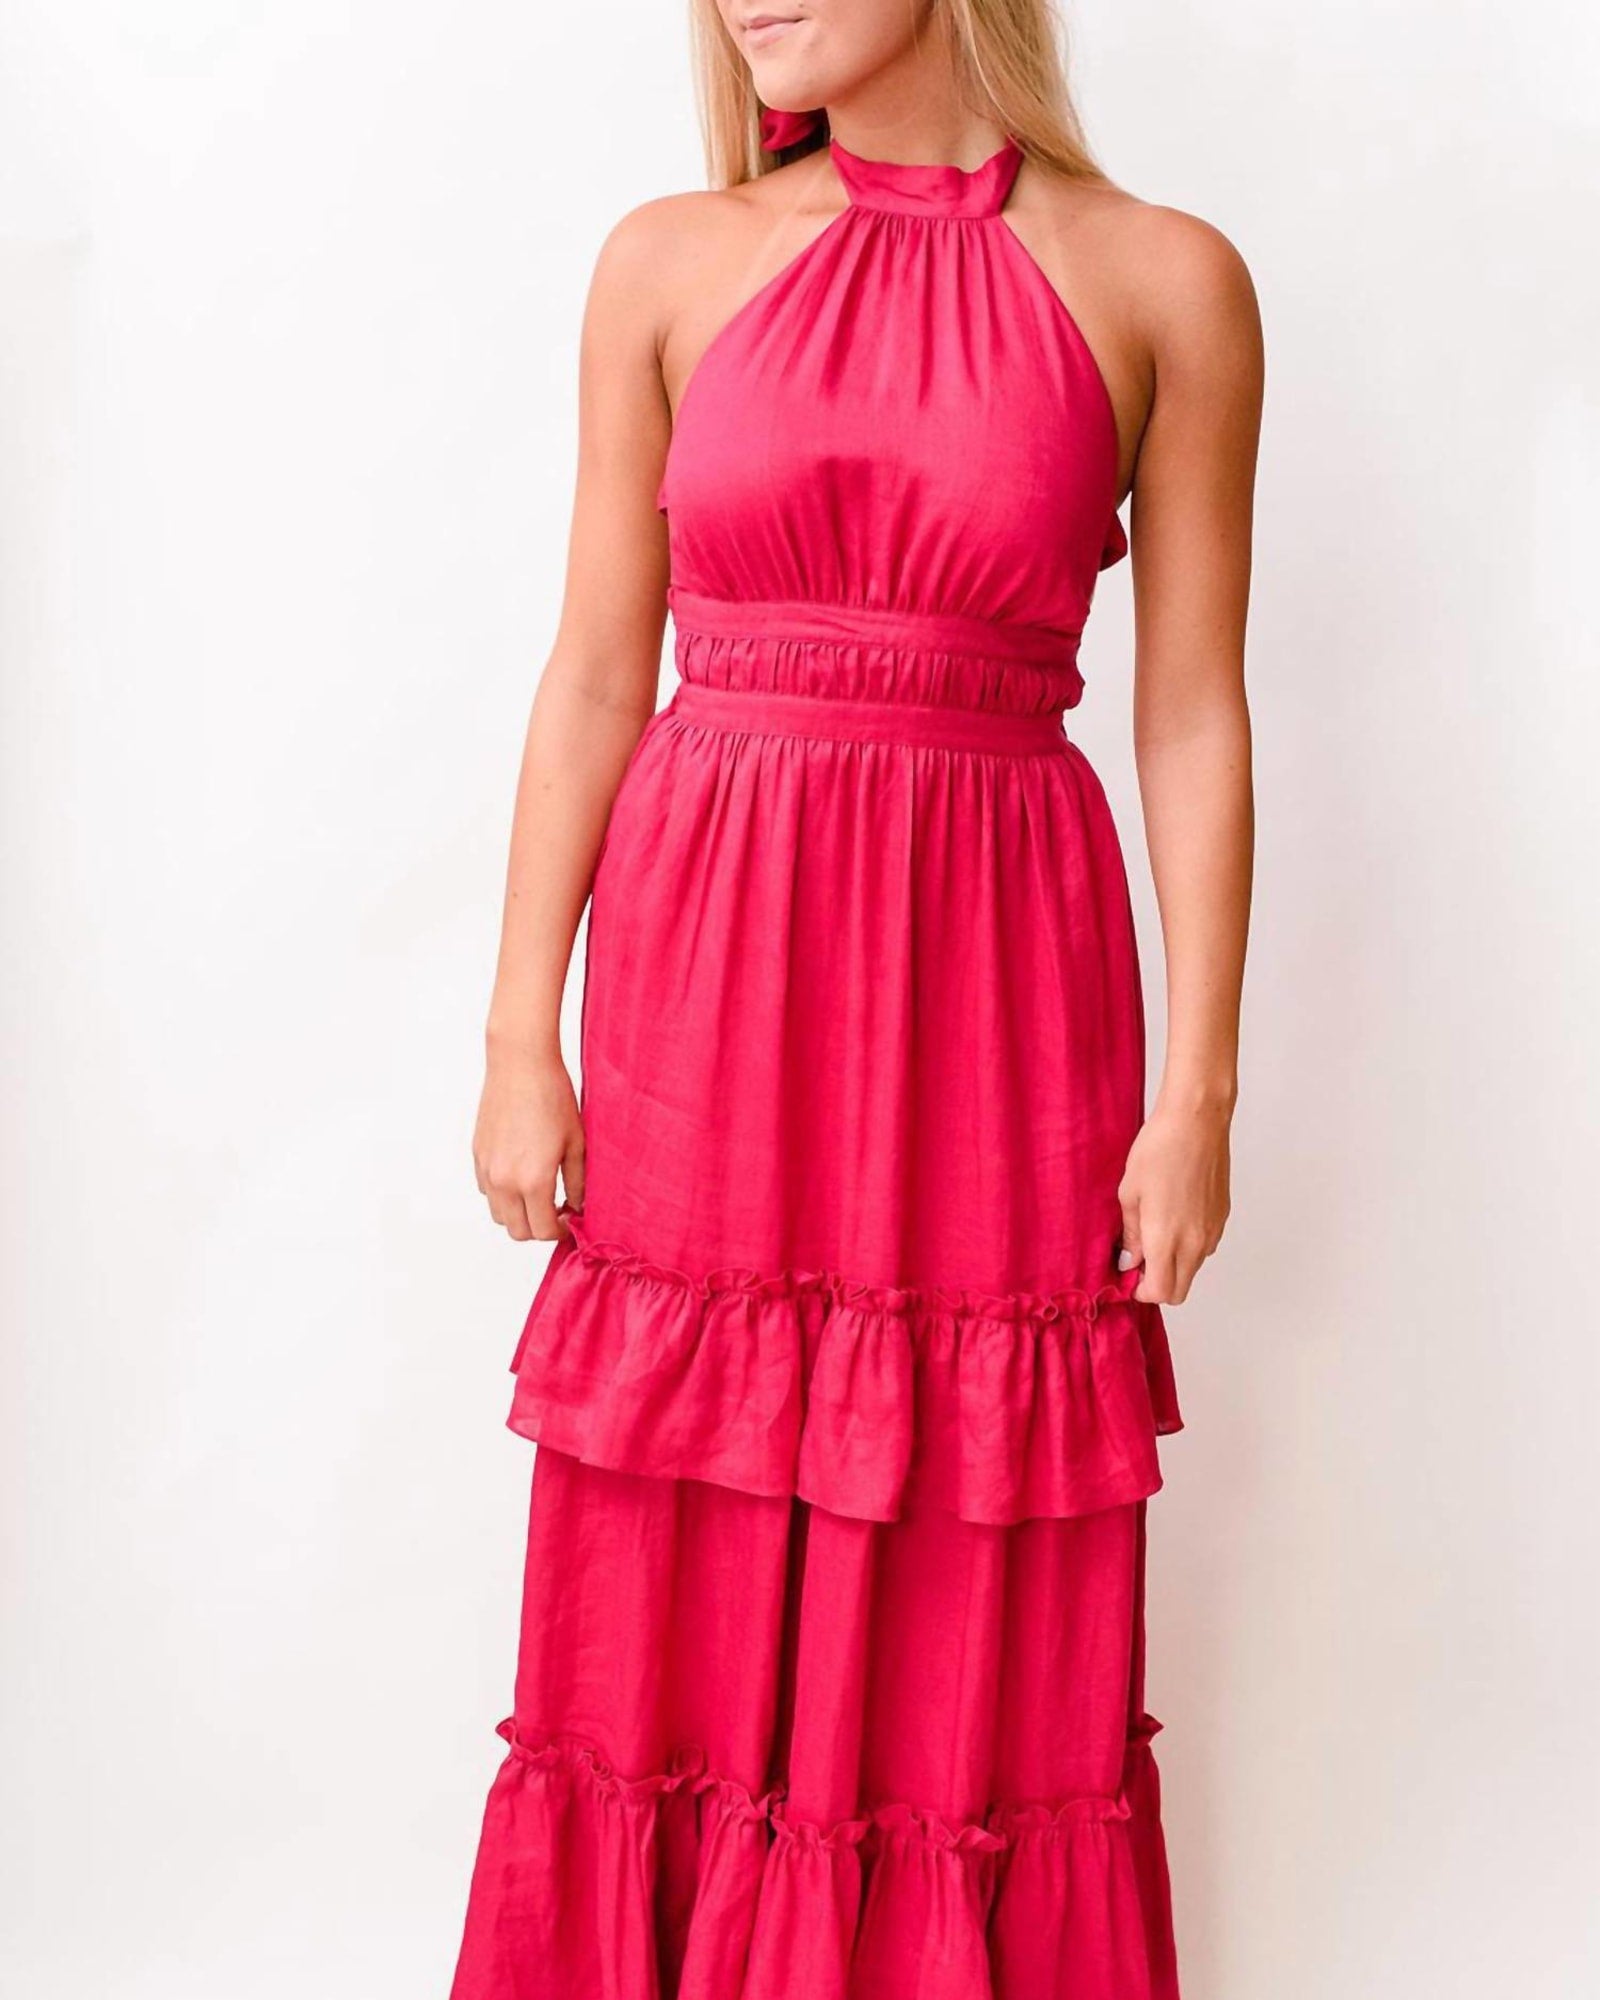 Raeann Dress in Raspberry | Raspberry